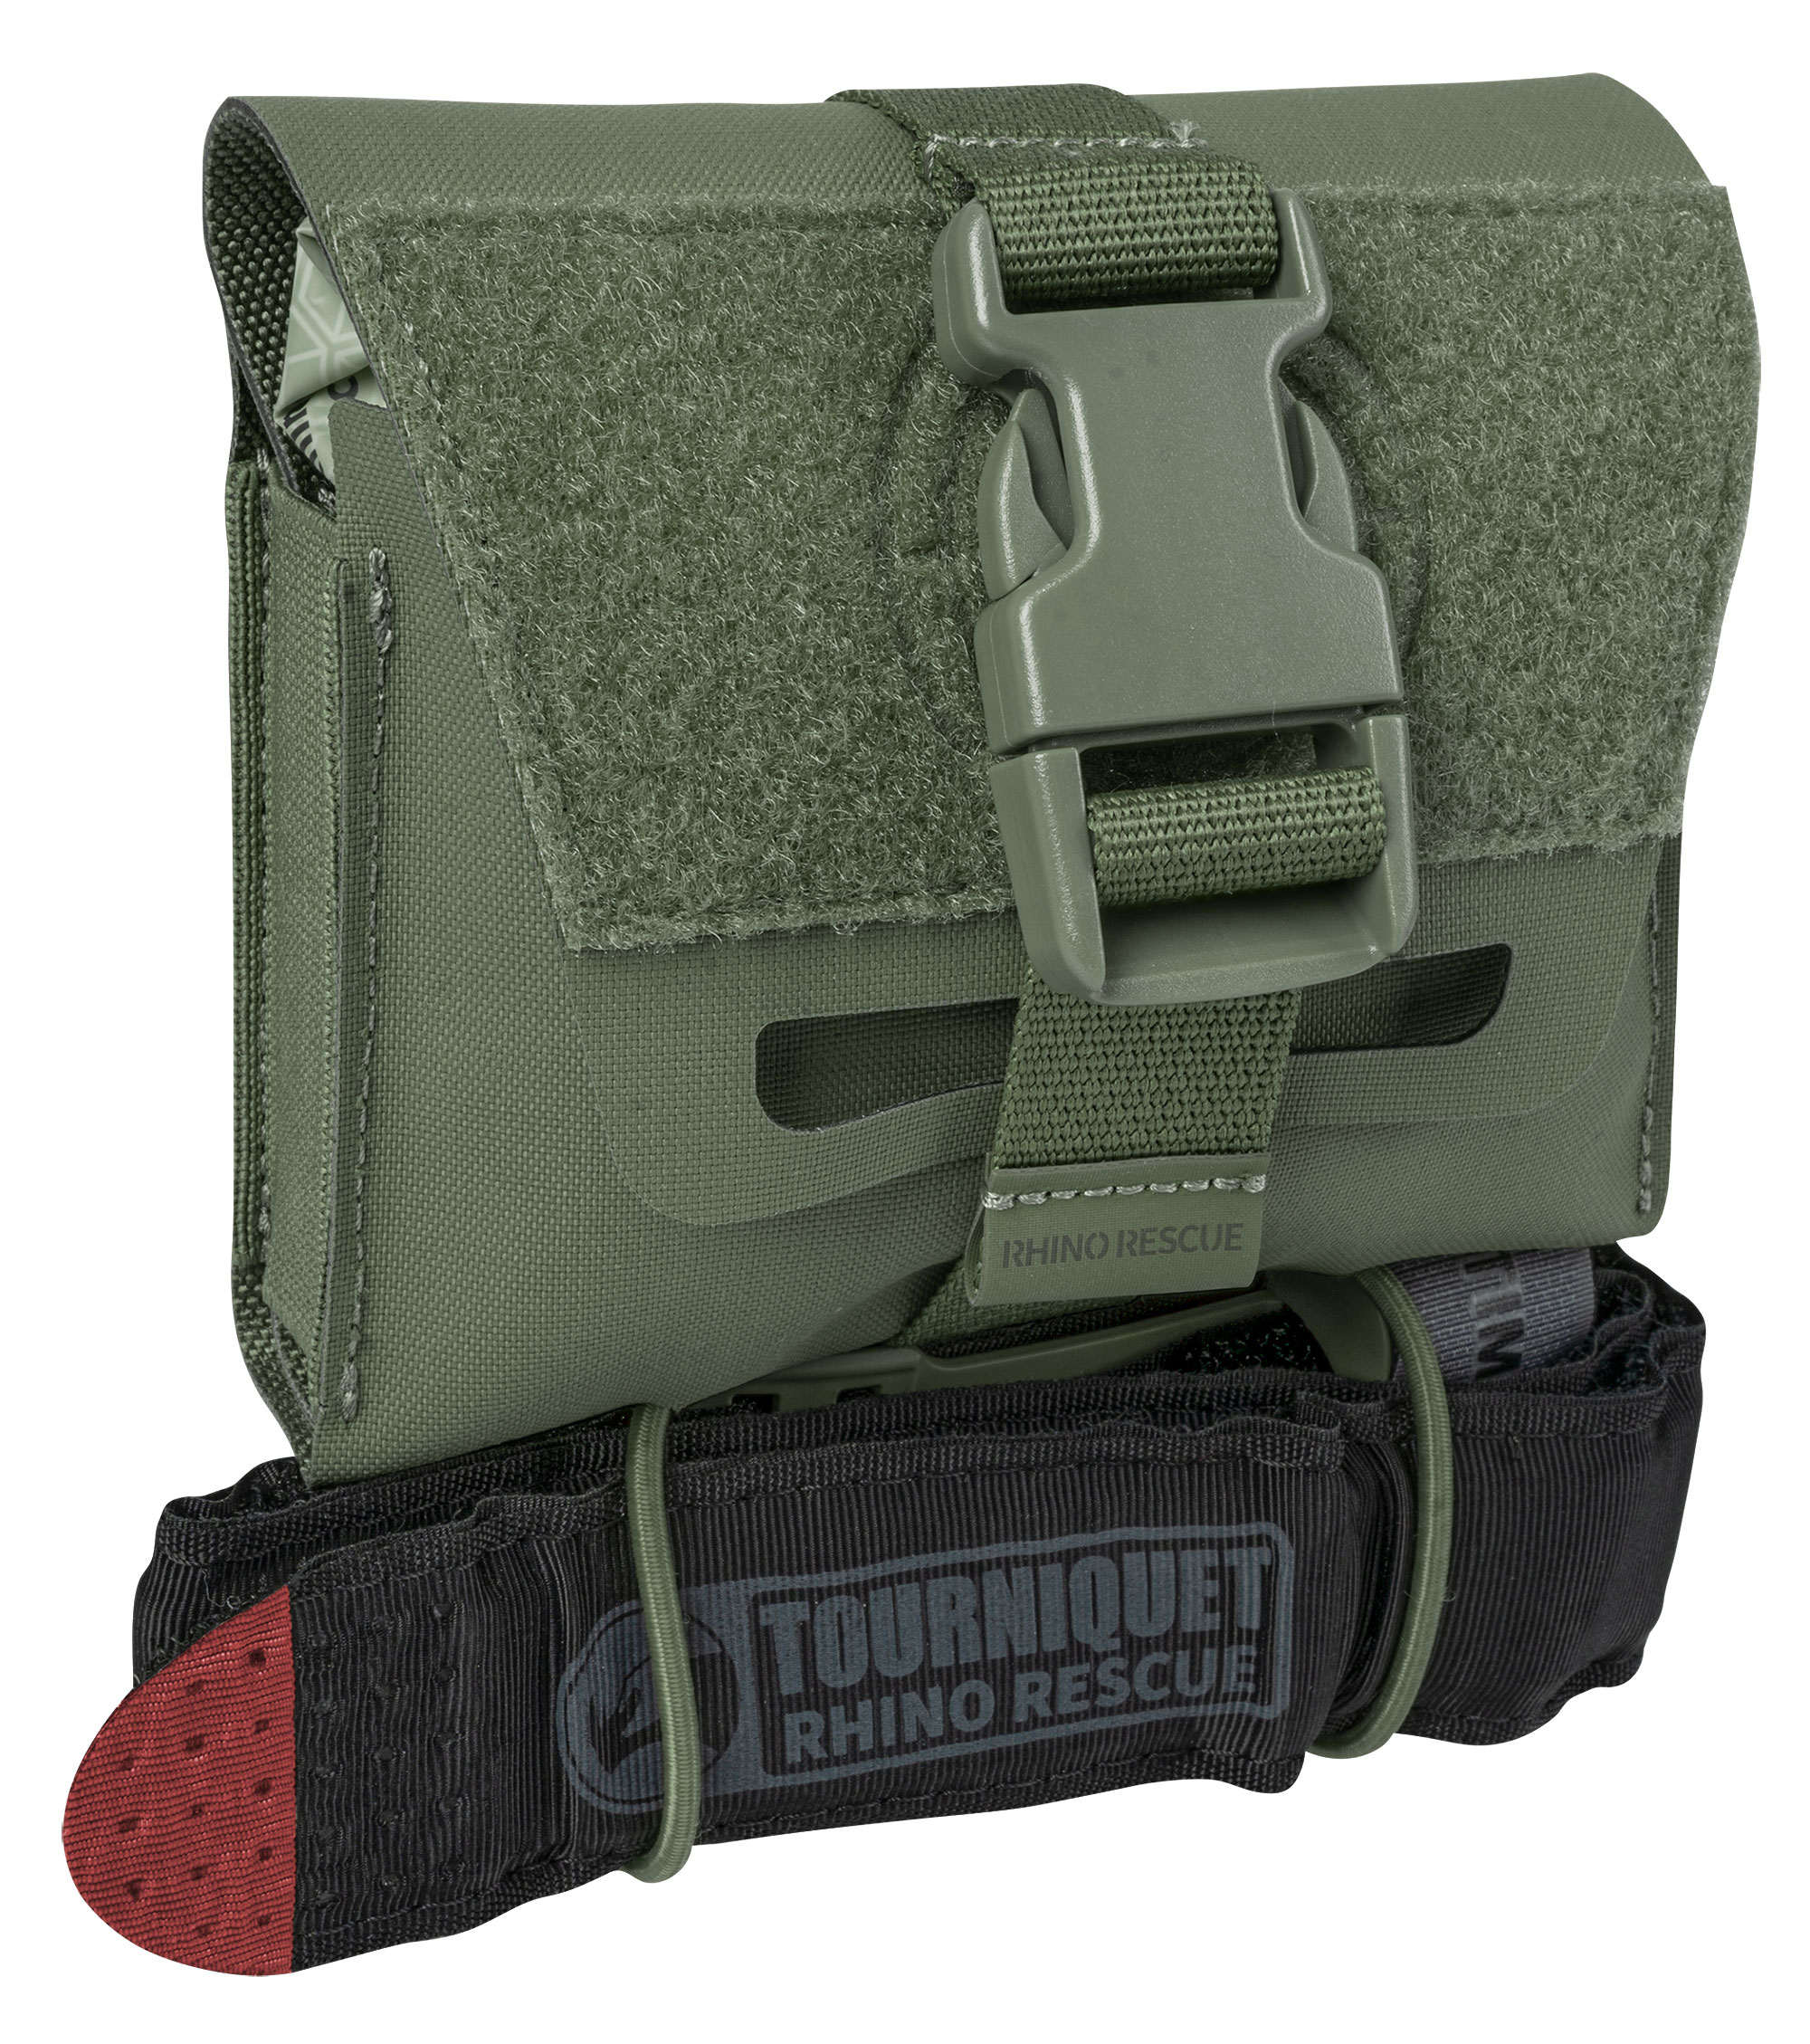 Lifesport Erste Hilfe Set, 3Pack Erste-Hilfe-Koffer First Aid Kit  Notfalltasche Medizinisch Tasche Klein kompakt